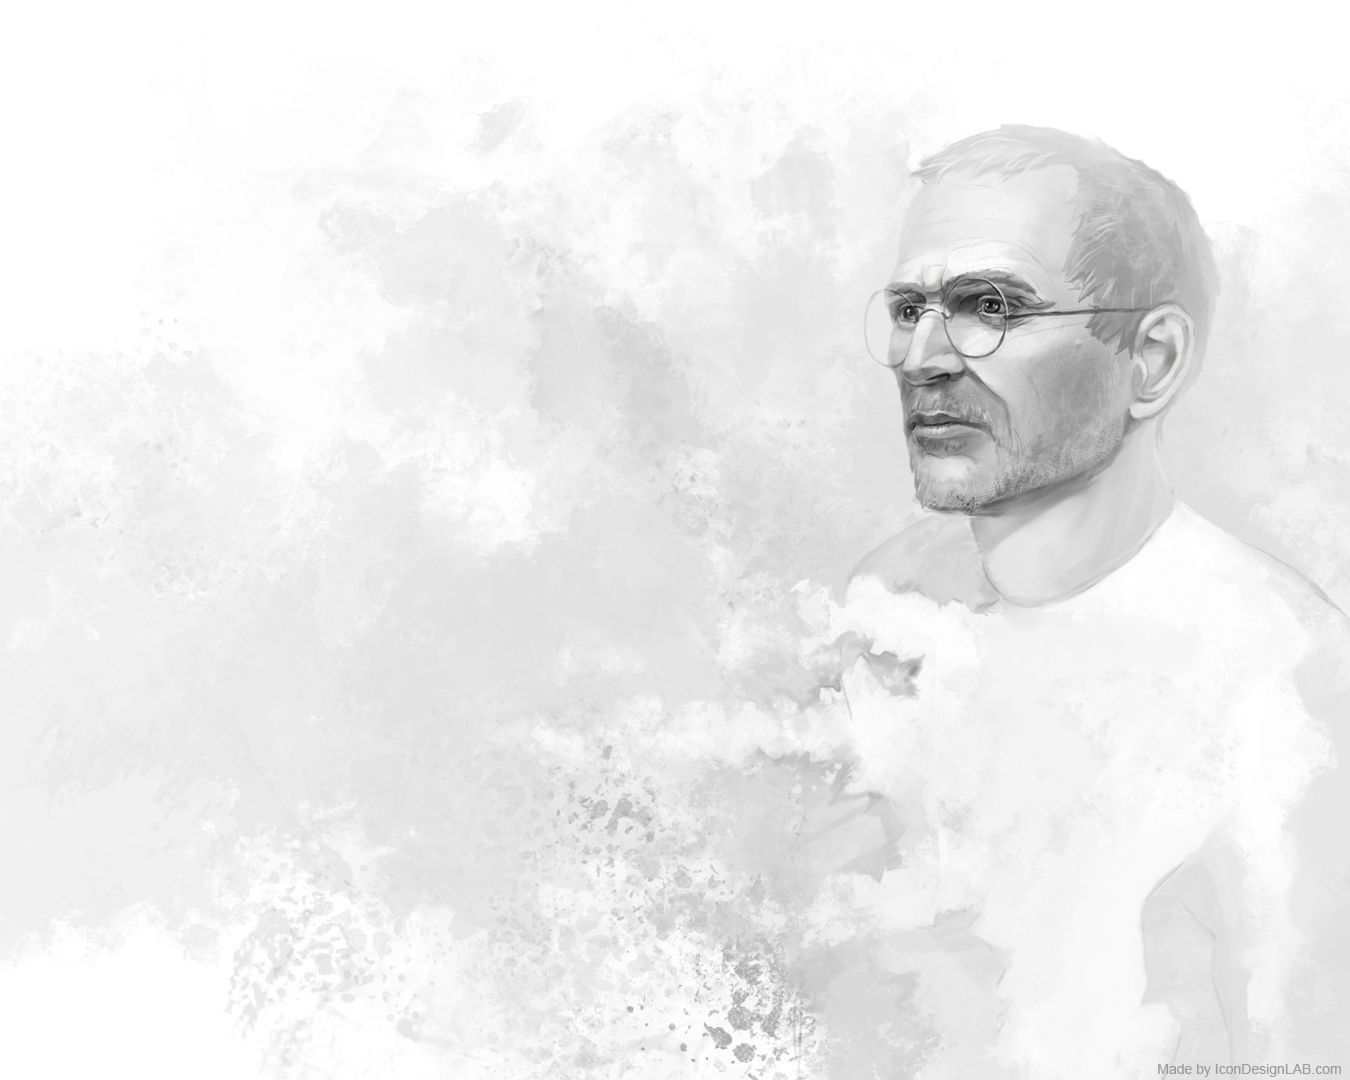 Steve Jobs Wallpaper by IconDesignLAB on DeviantArt